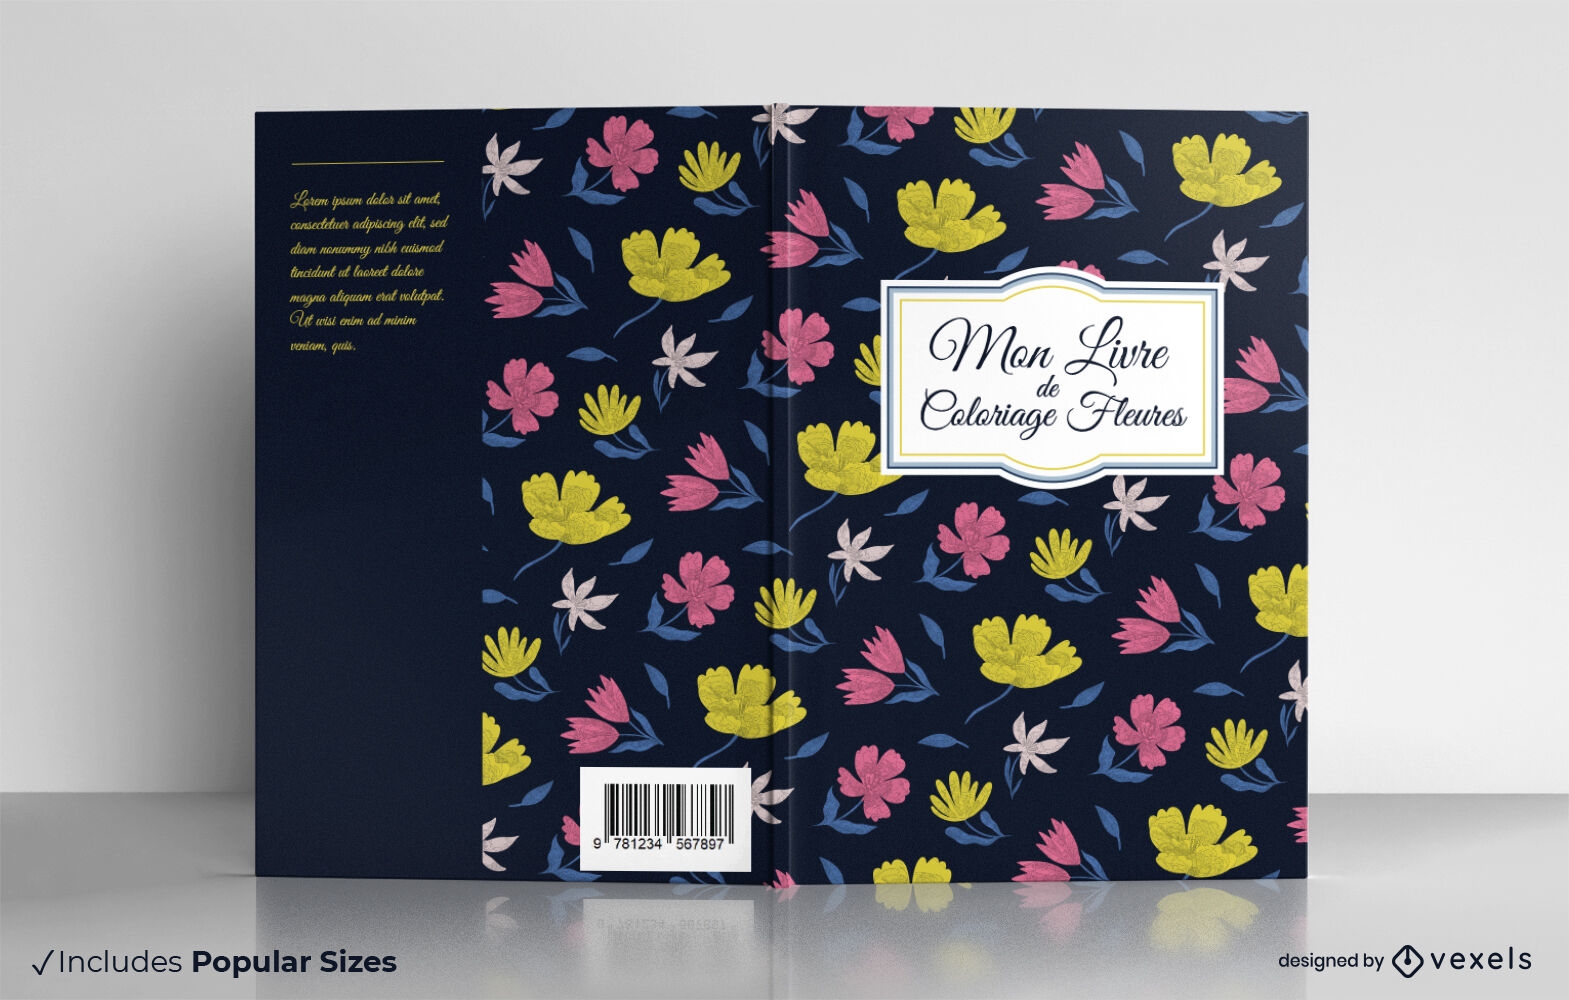 Floral pattern book cover design